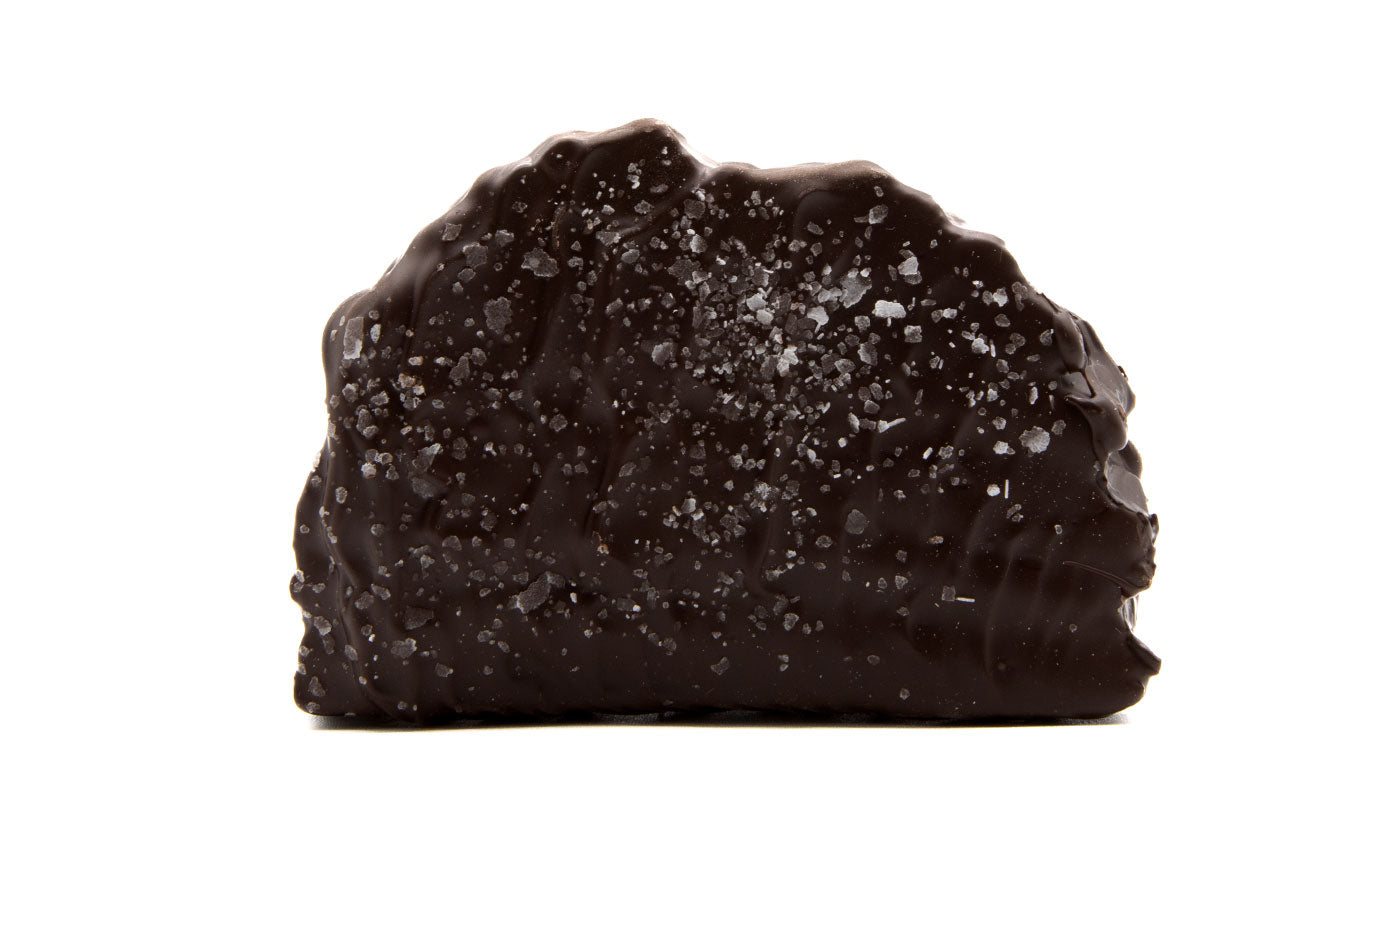 ENROBED - Dark Sea Salt Caramel Fudge